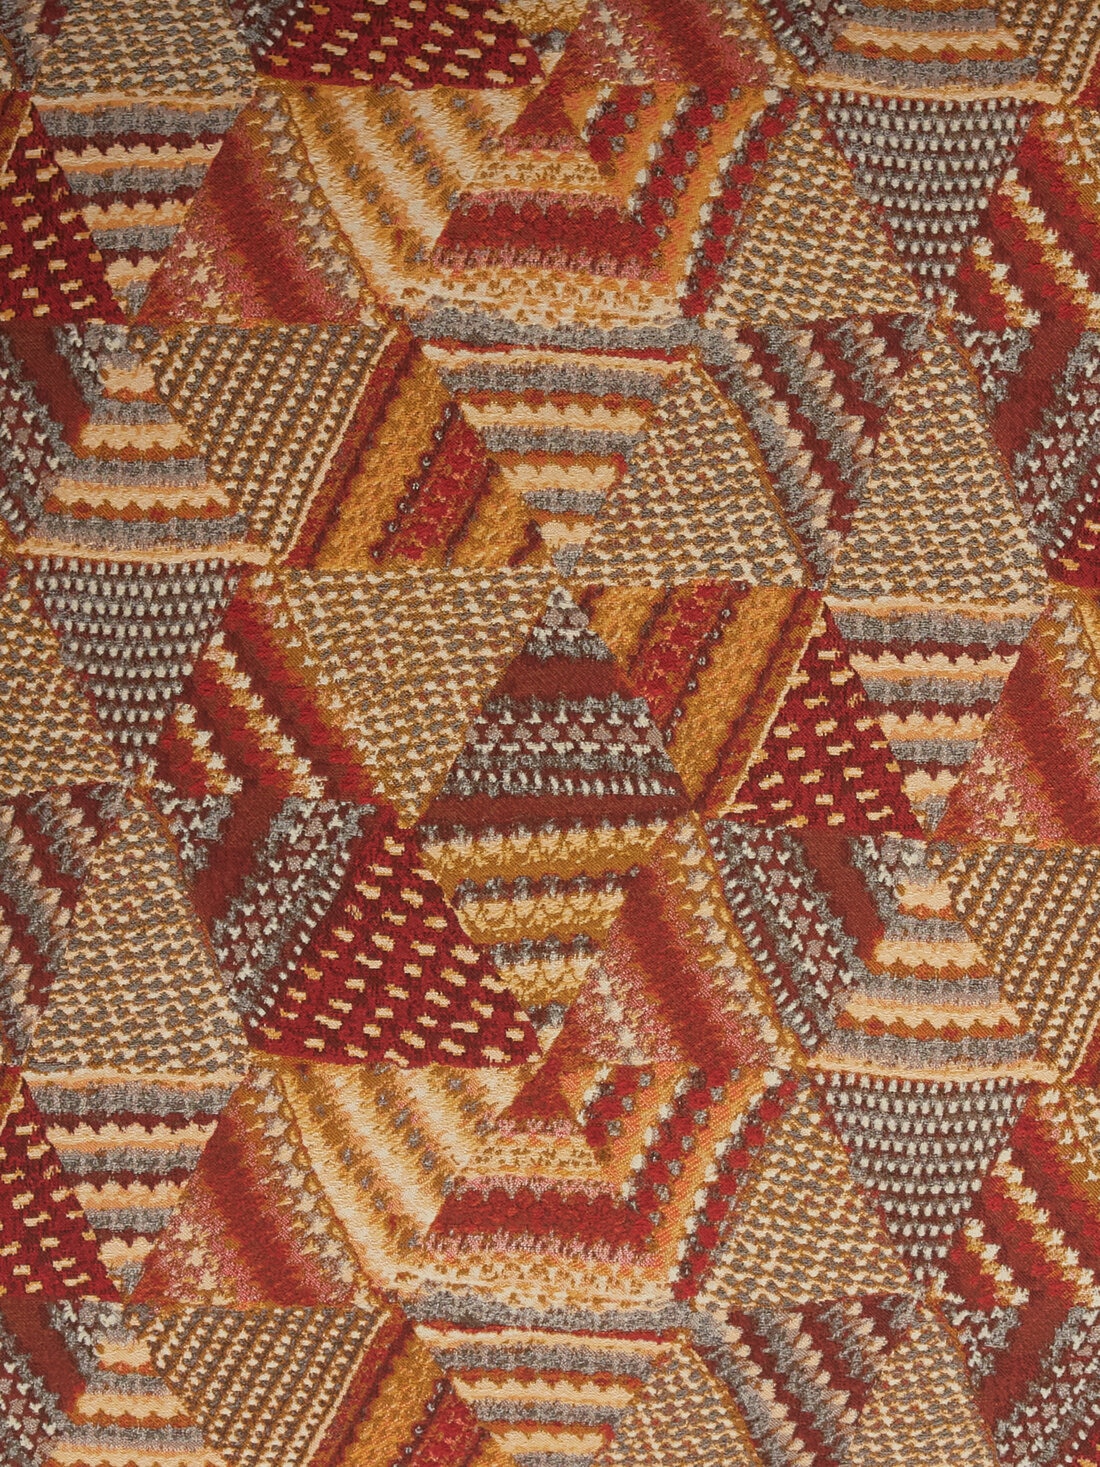 Berkeley cushion 60x60 cm, Multicoloured  - 8051275608387 - 3